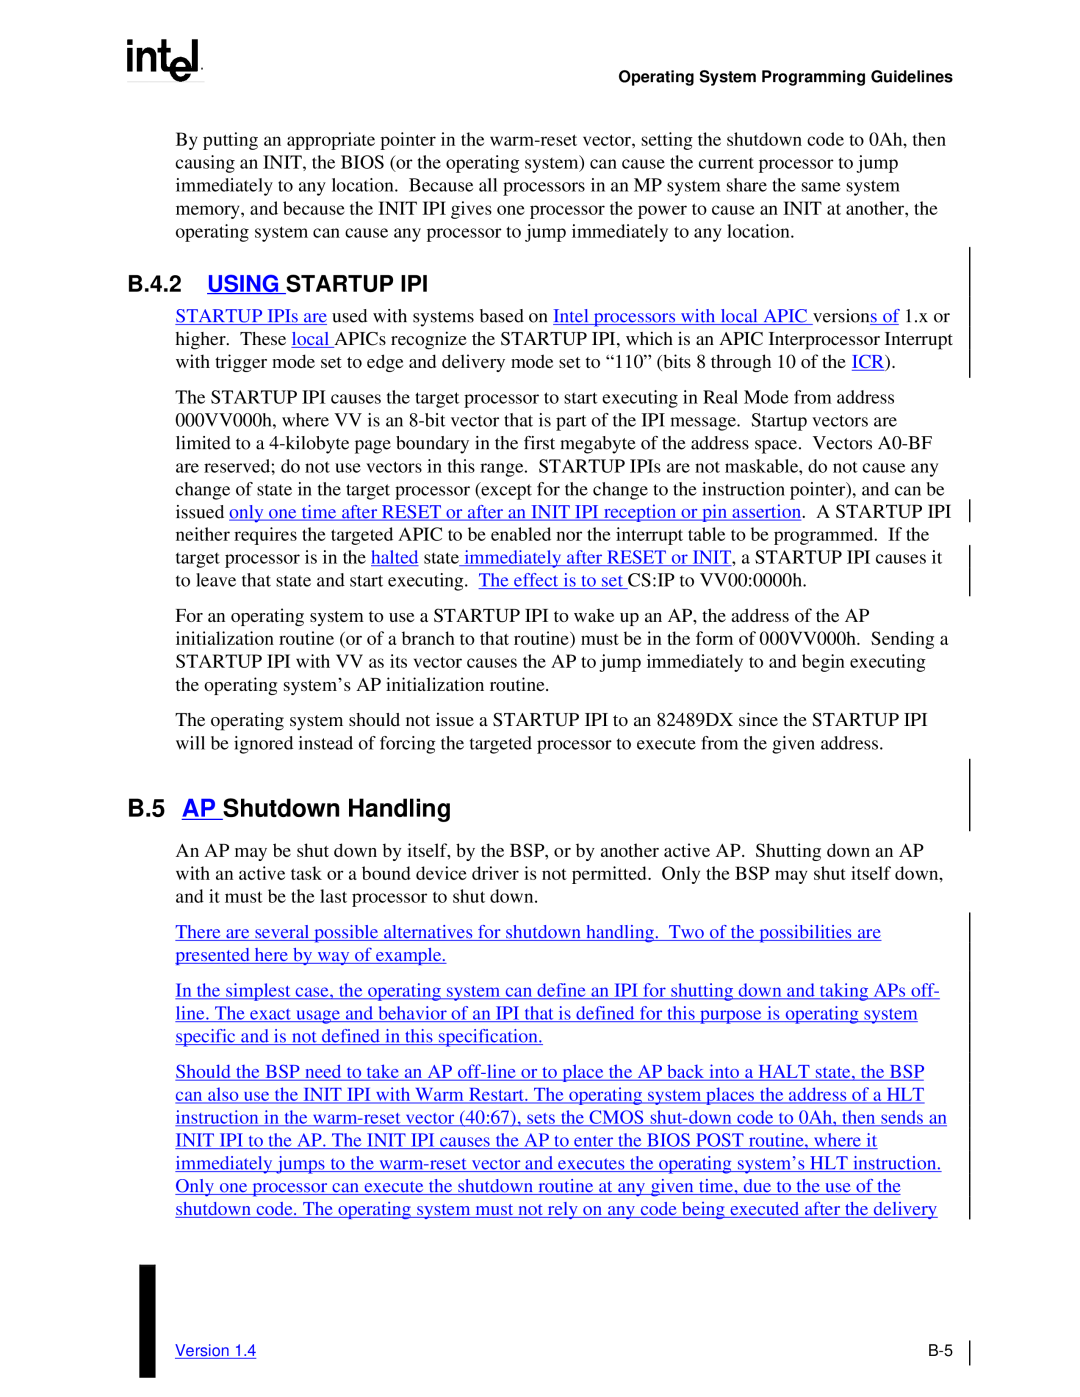 Intel MultiProcessor manual B.5 APShutdown Handling, B.4.2 USINGSTARTUP IPI 